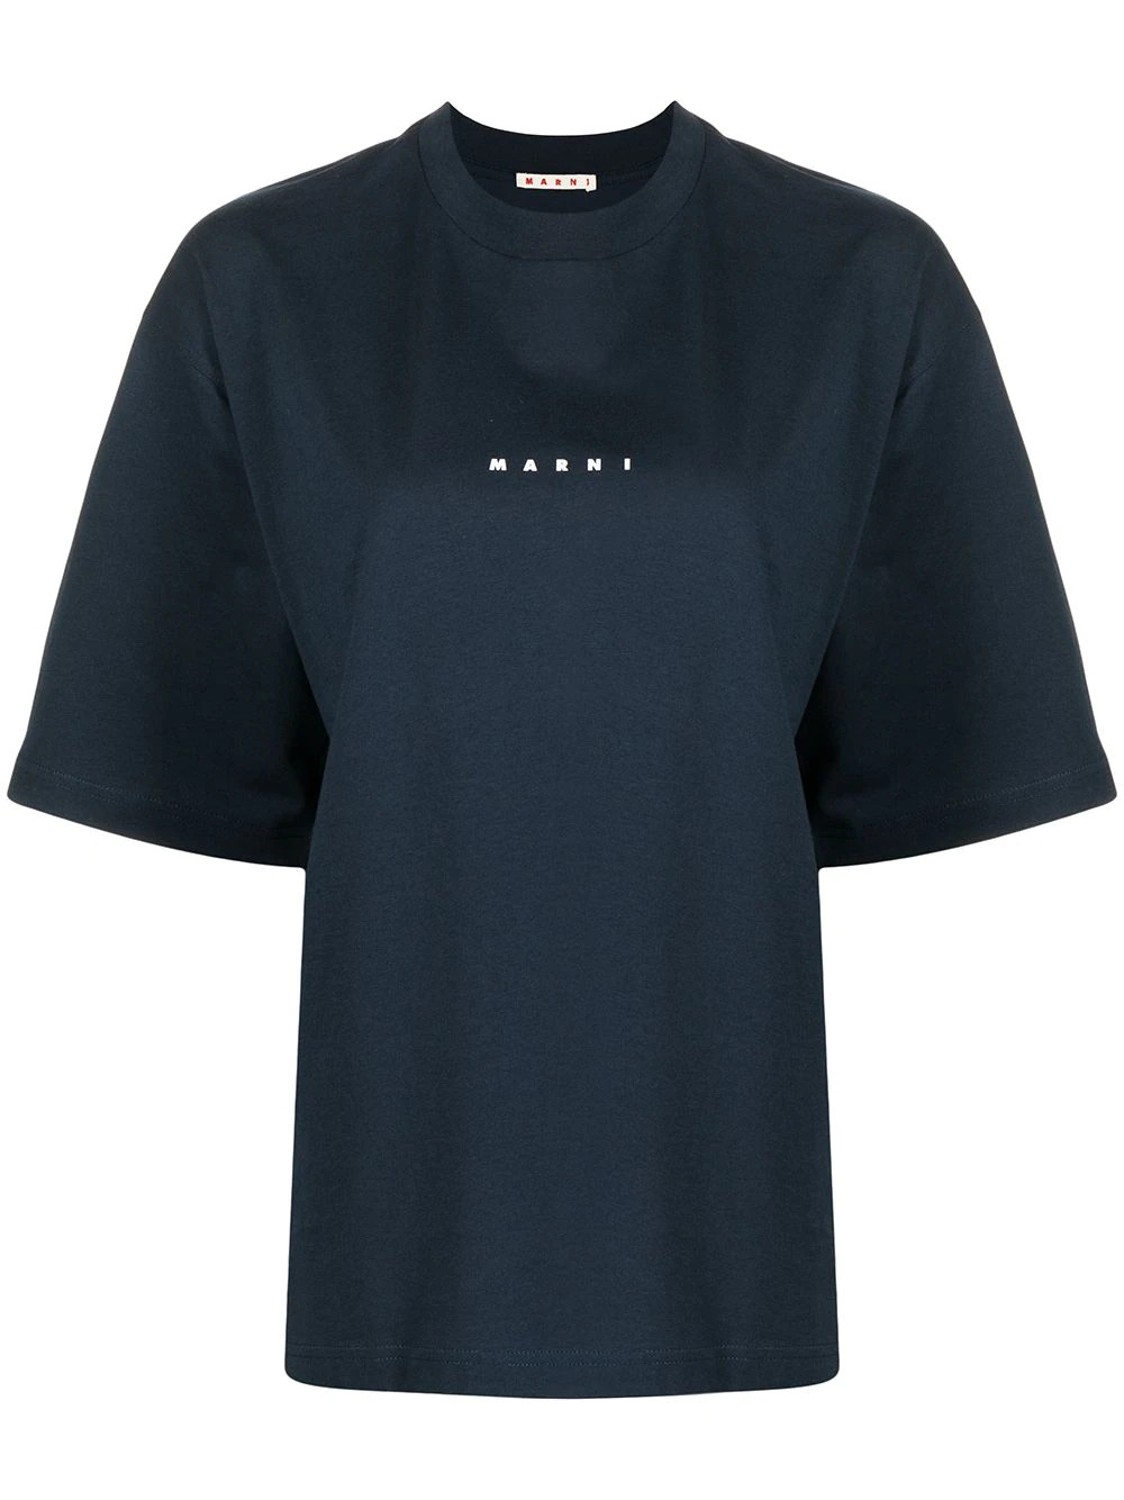 shop Marni  T-shirts: T-shirts Marni, girocollo, manica corta, fit oversize, blu notte, mini logo frontale.

Composizione: 100% cotone. number 2602